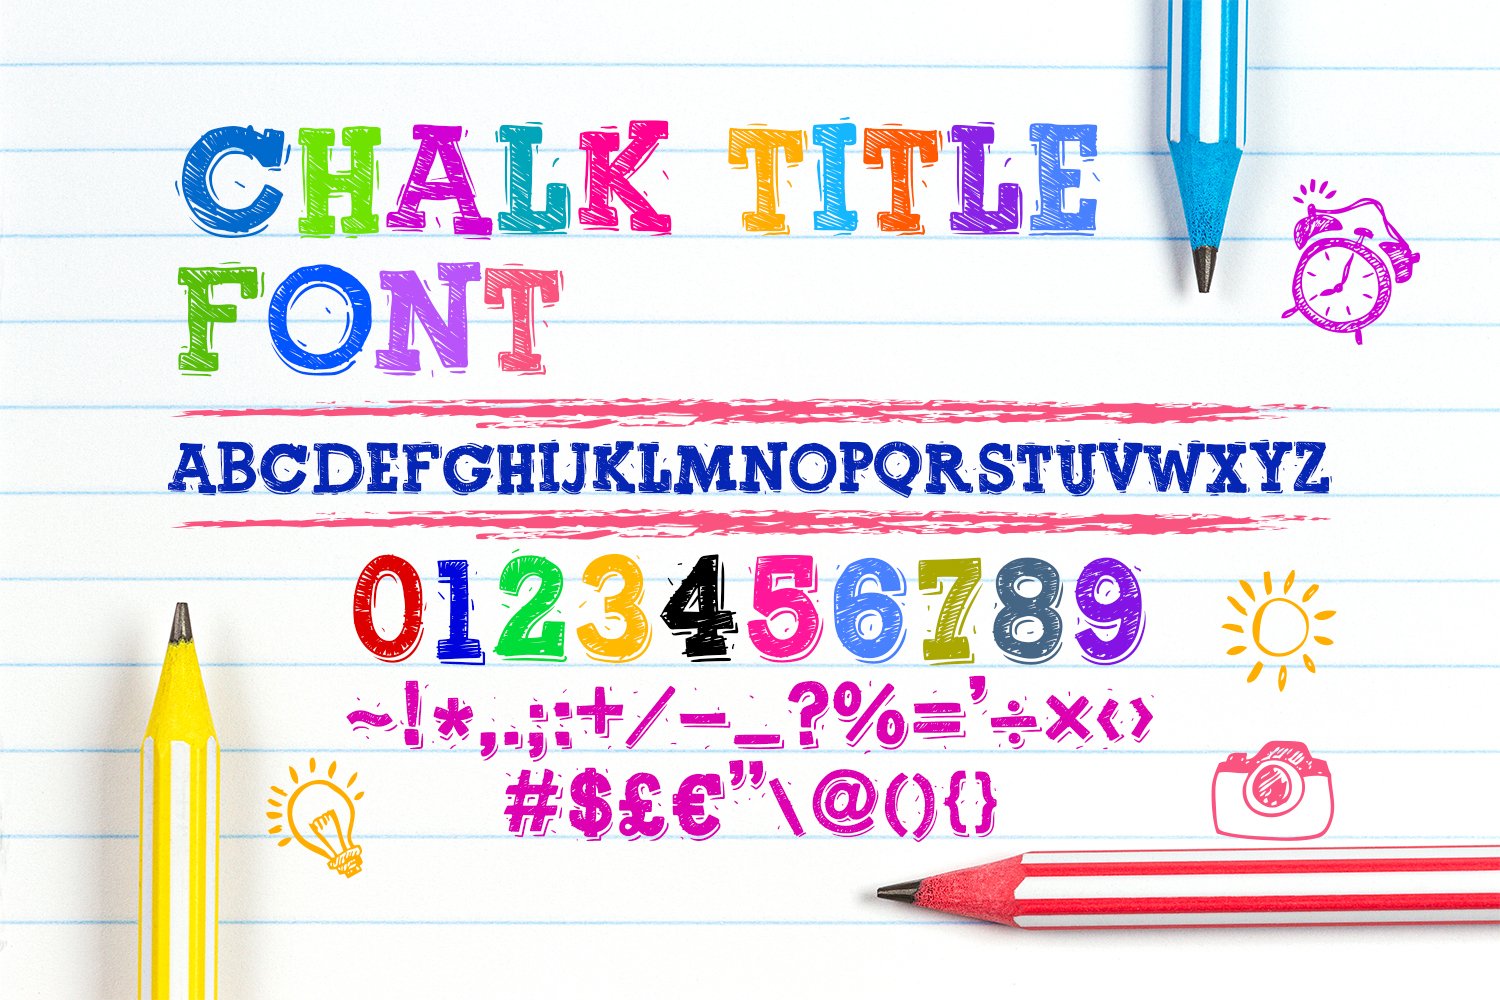 Chalk Title Font cover image.